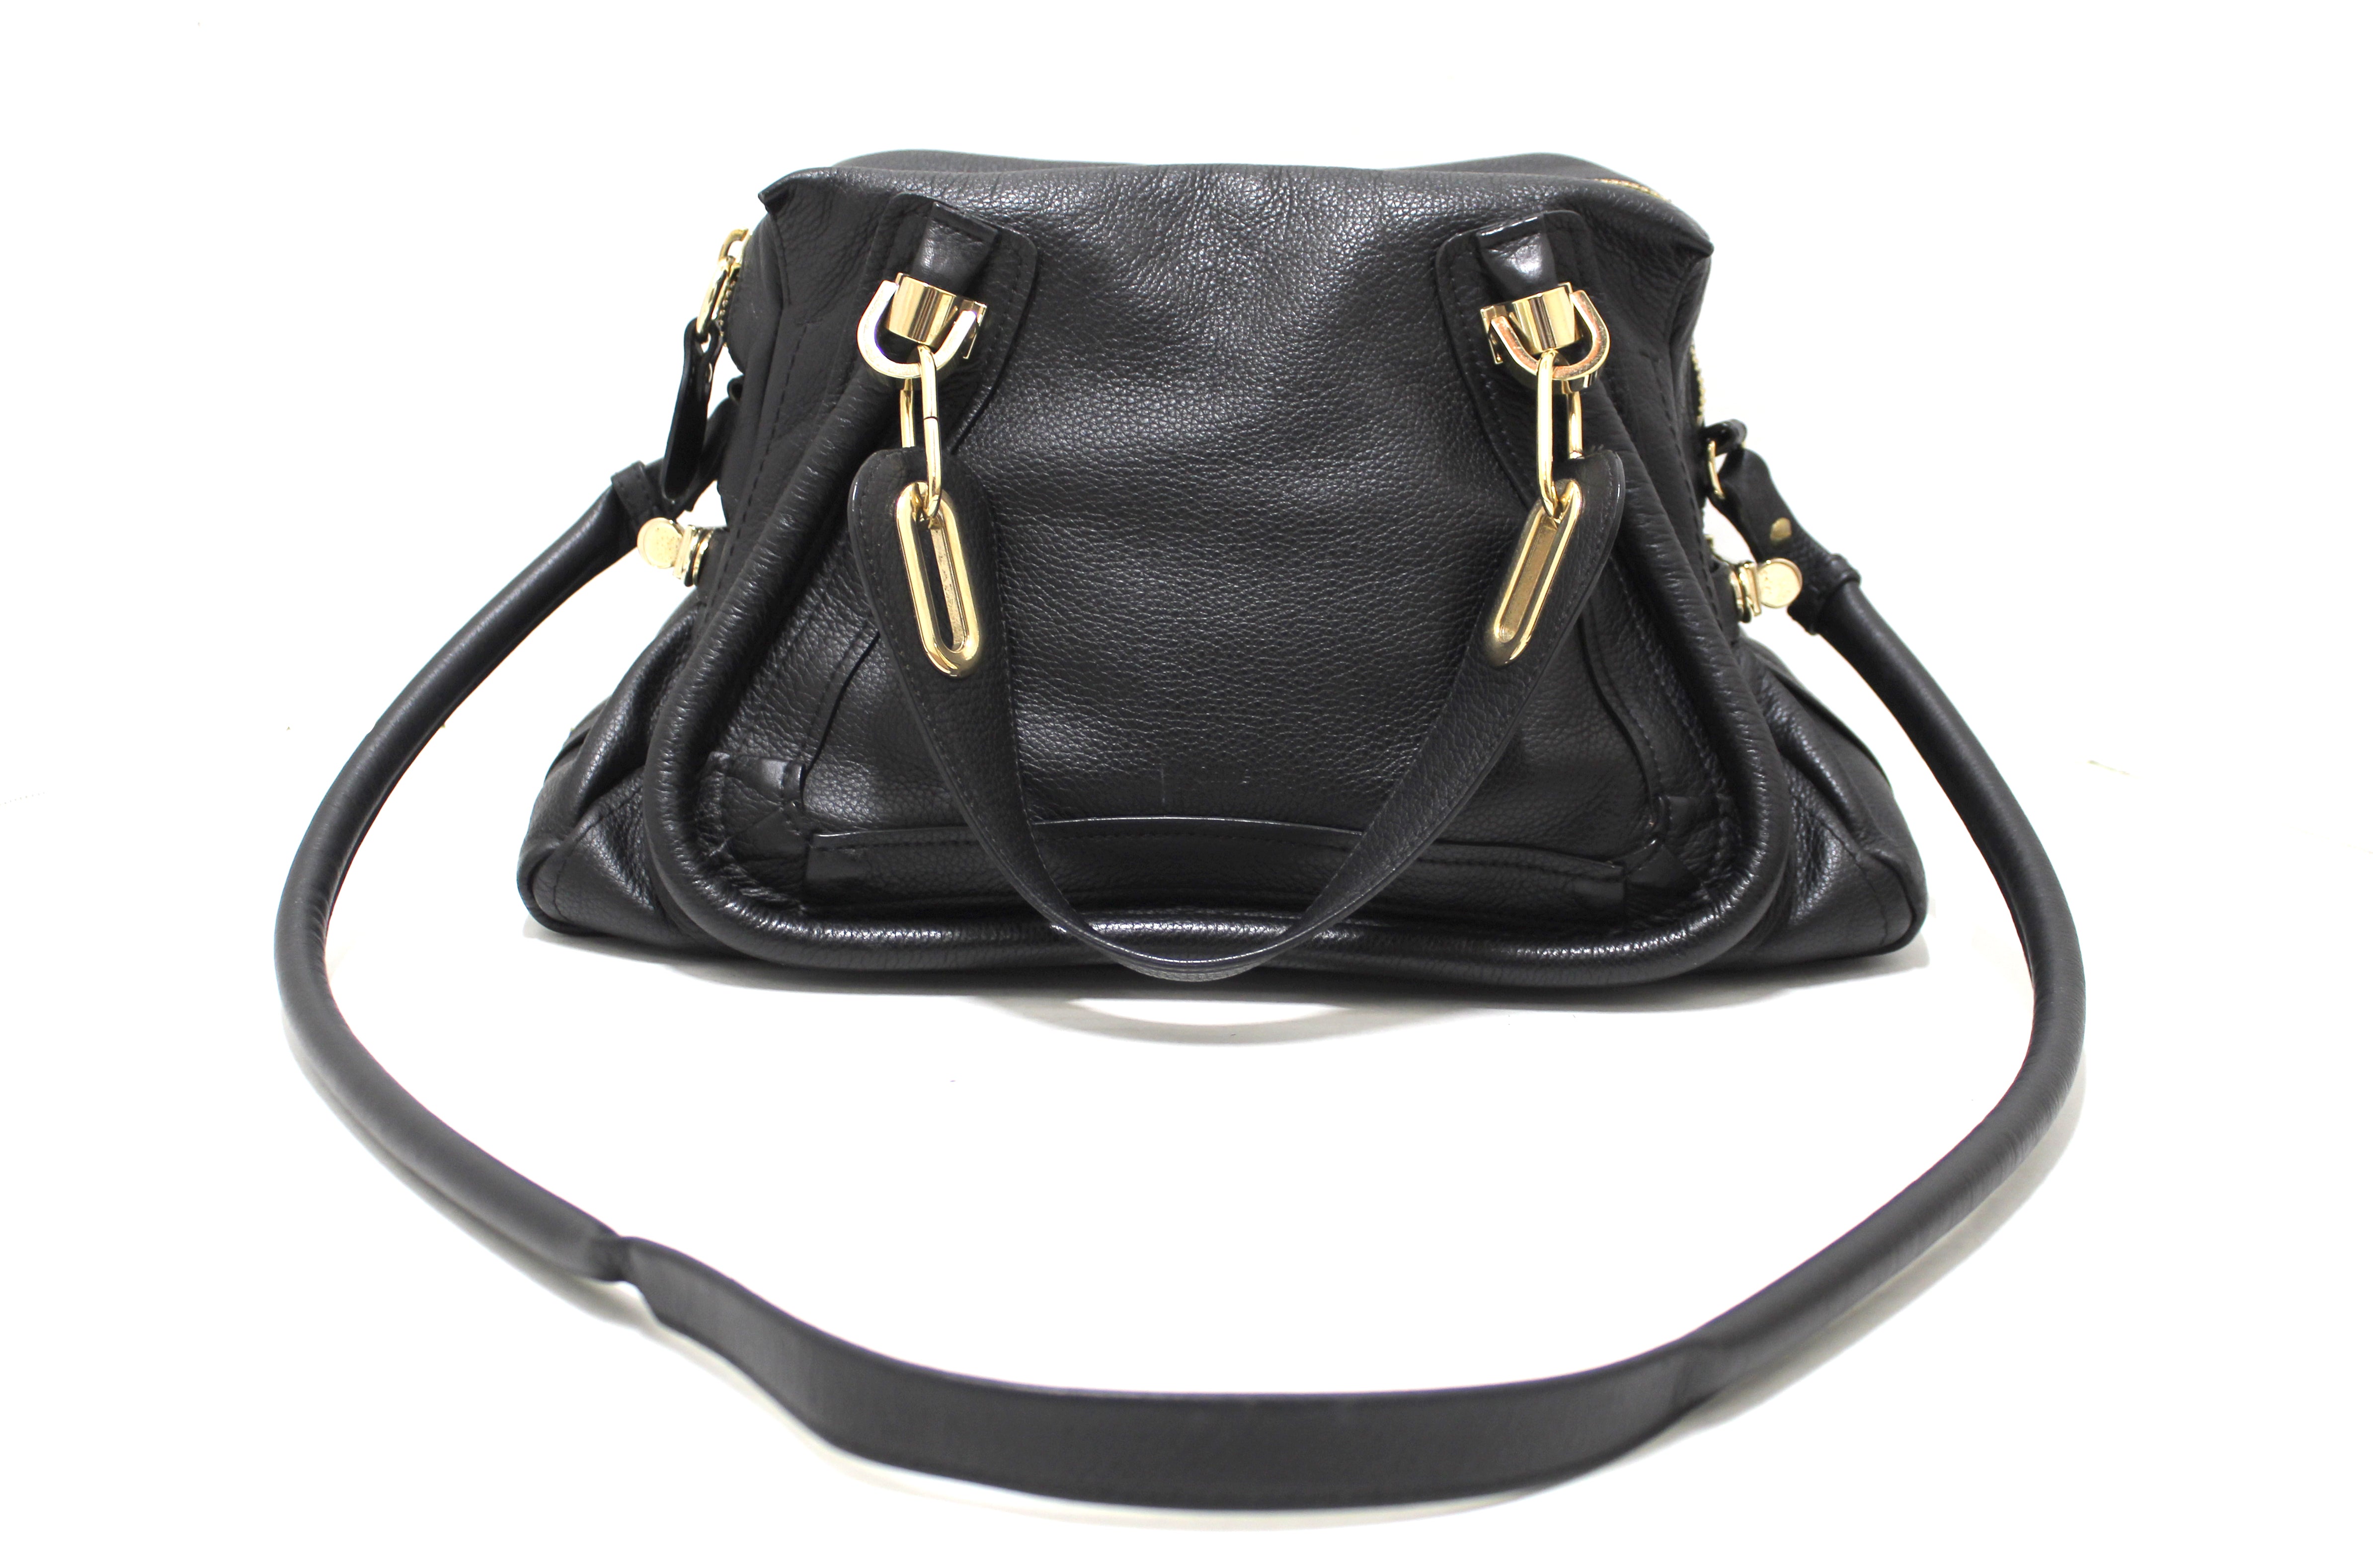 Authentic Chloe Paraty Black Calfskin Leather Medium Shoulder Bag